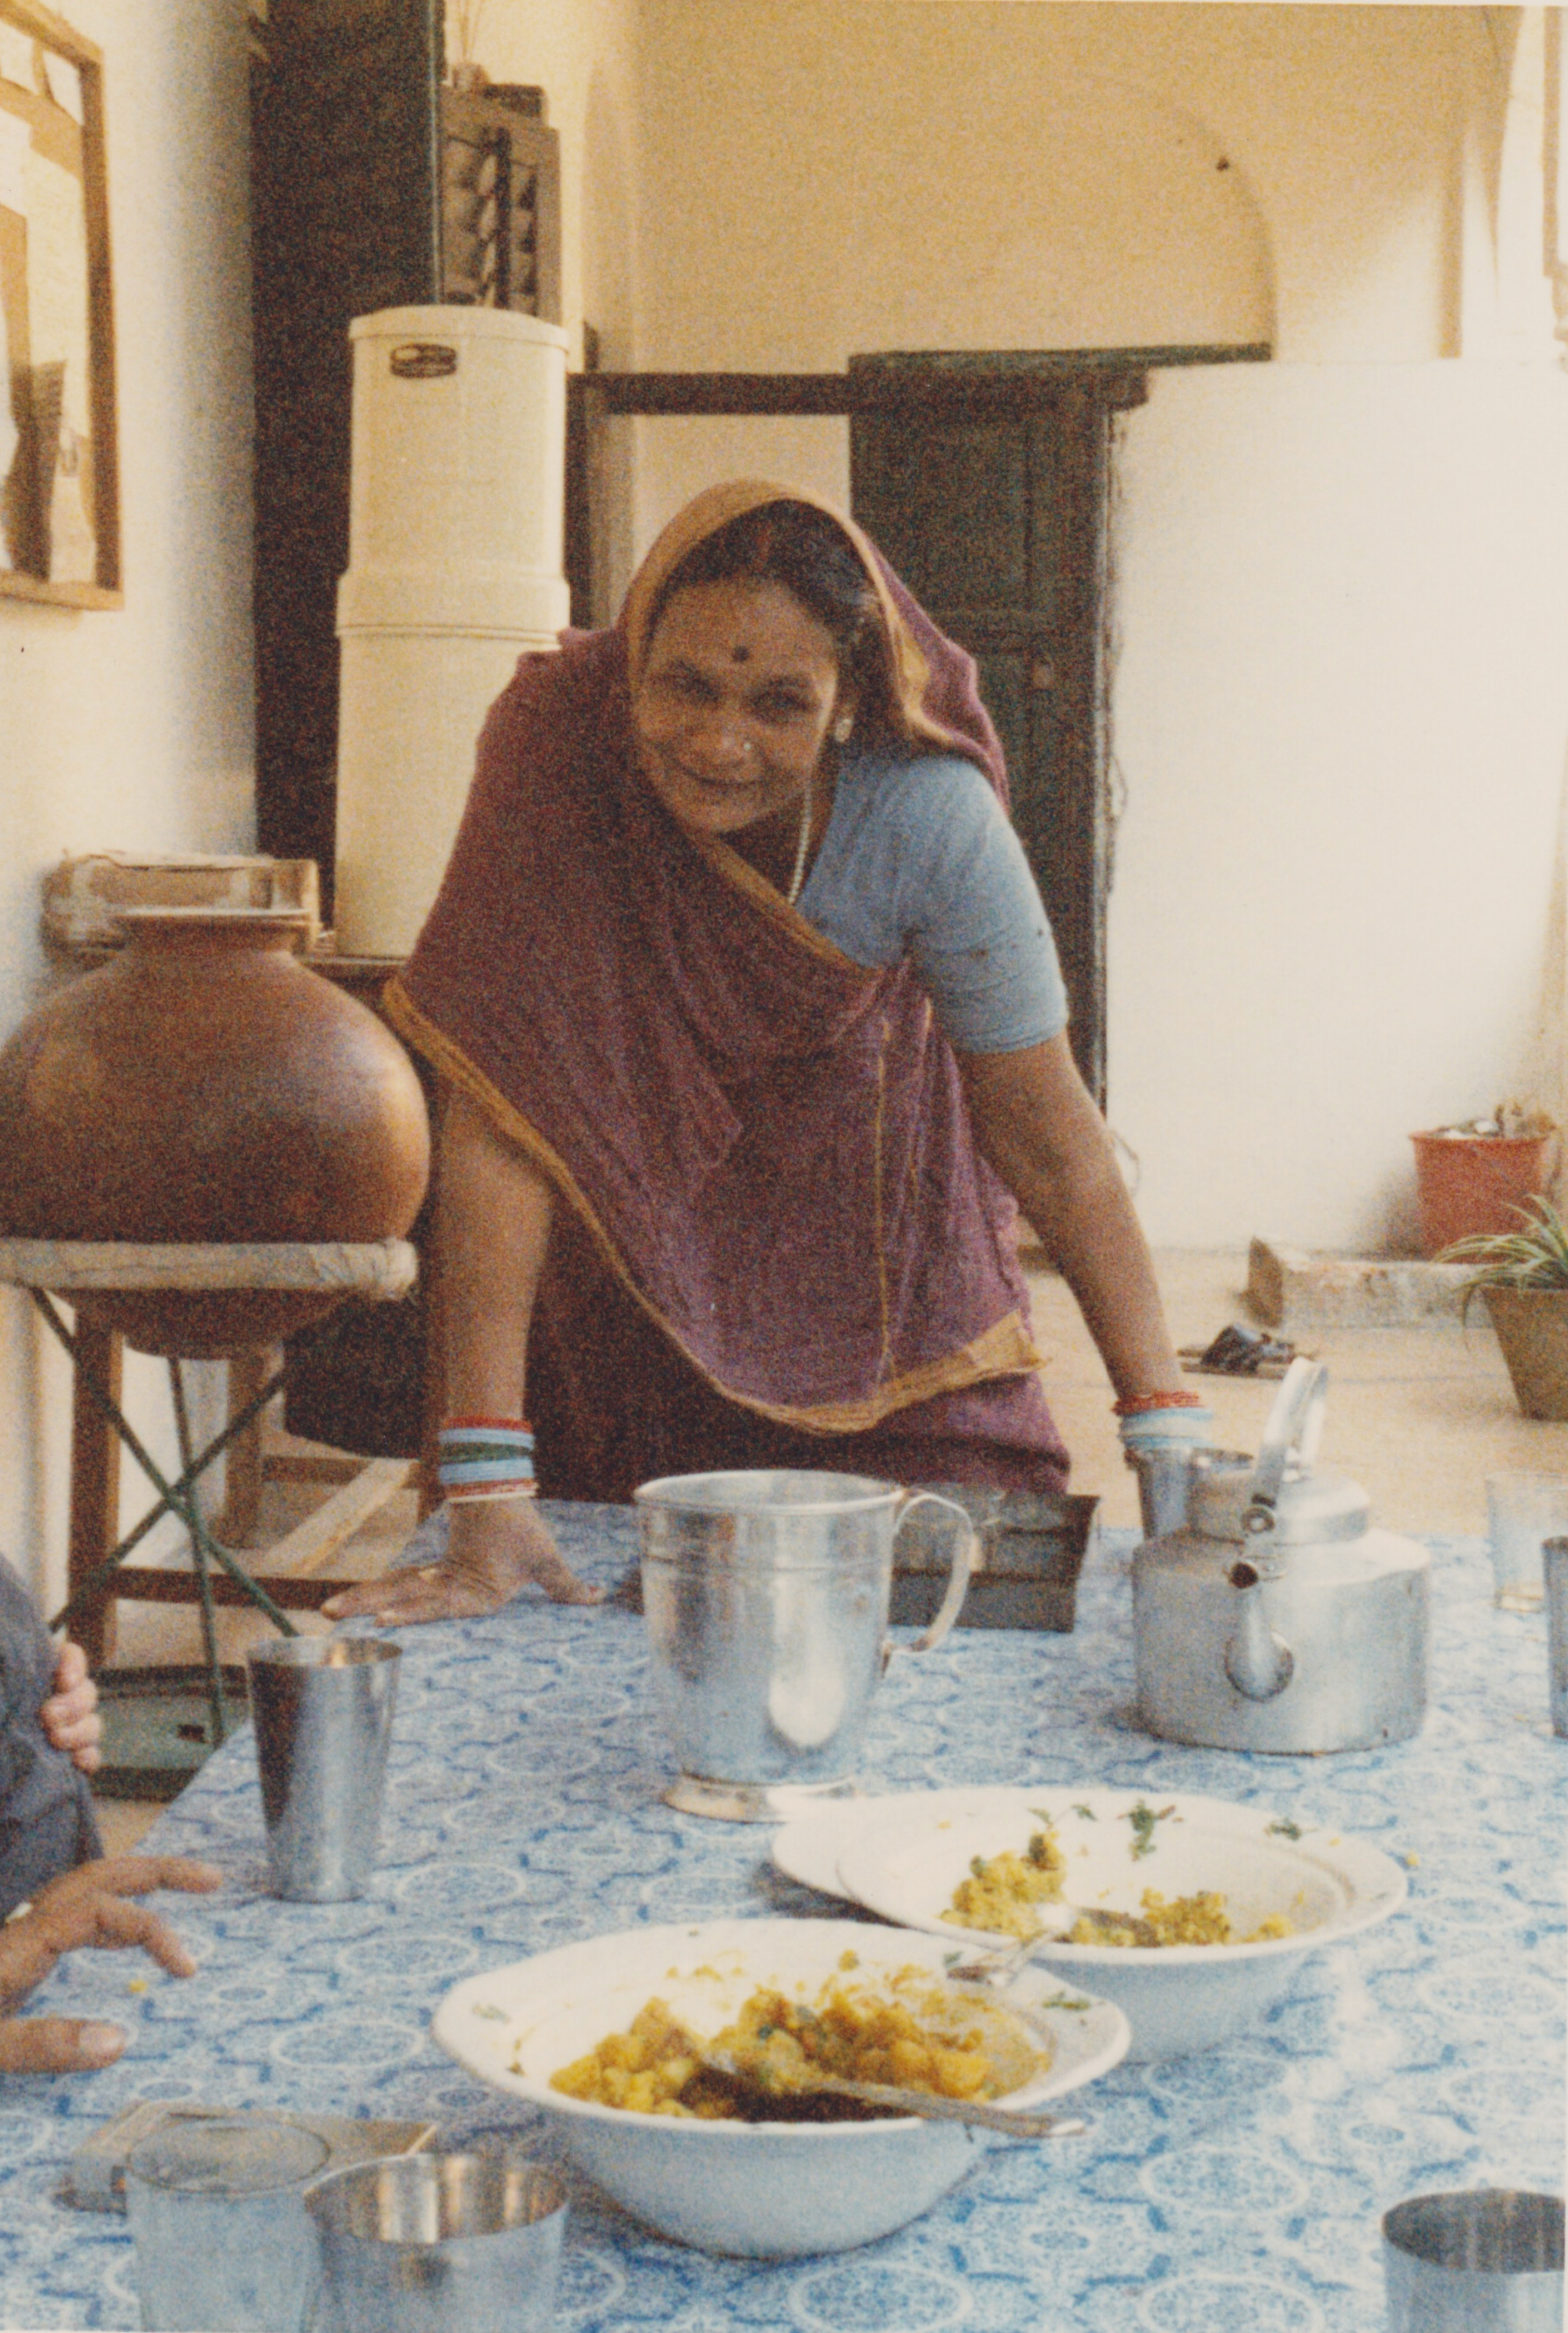 Durga serving lunch at the Bhavan